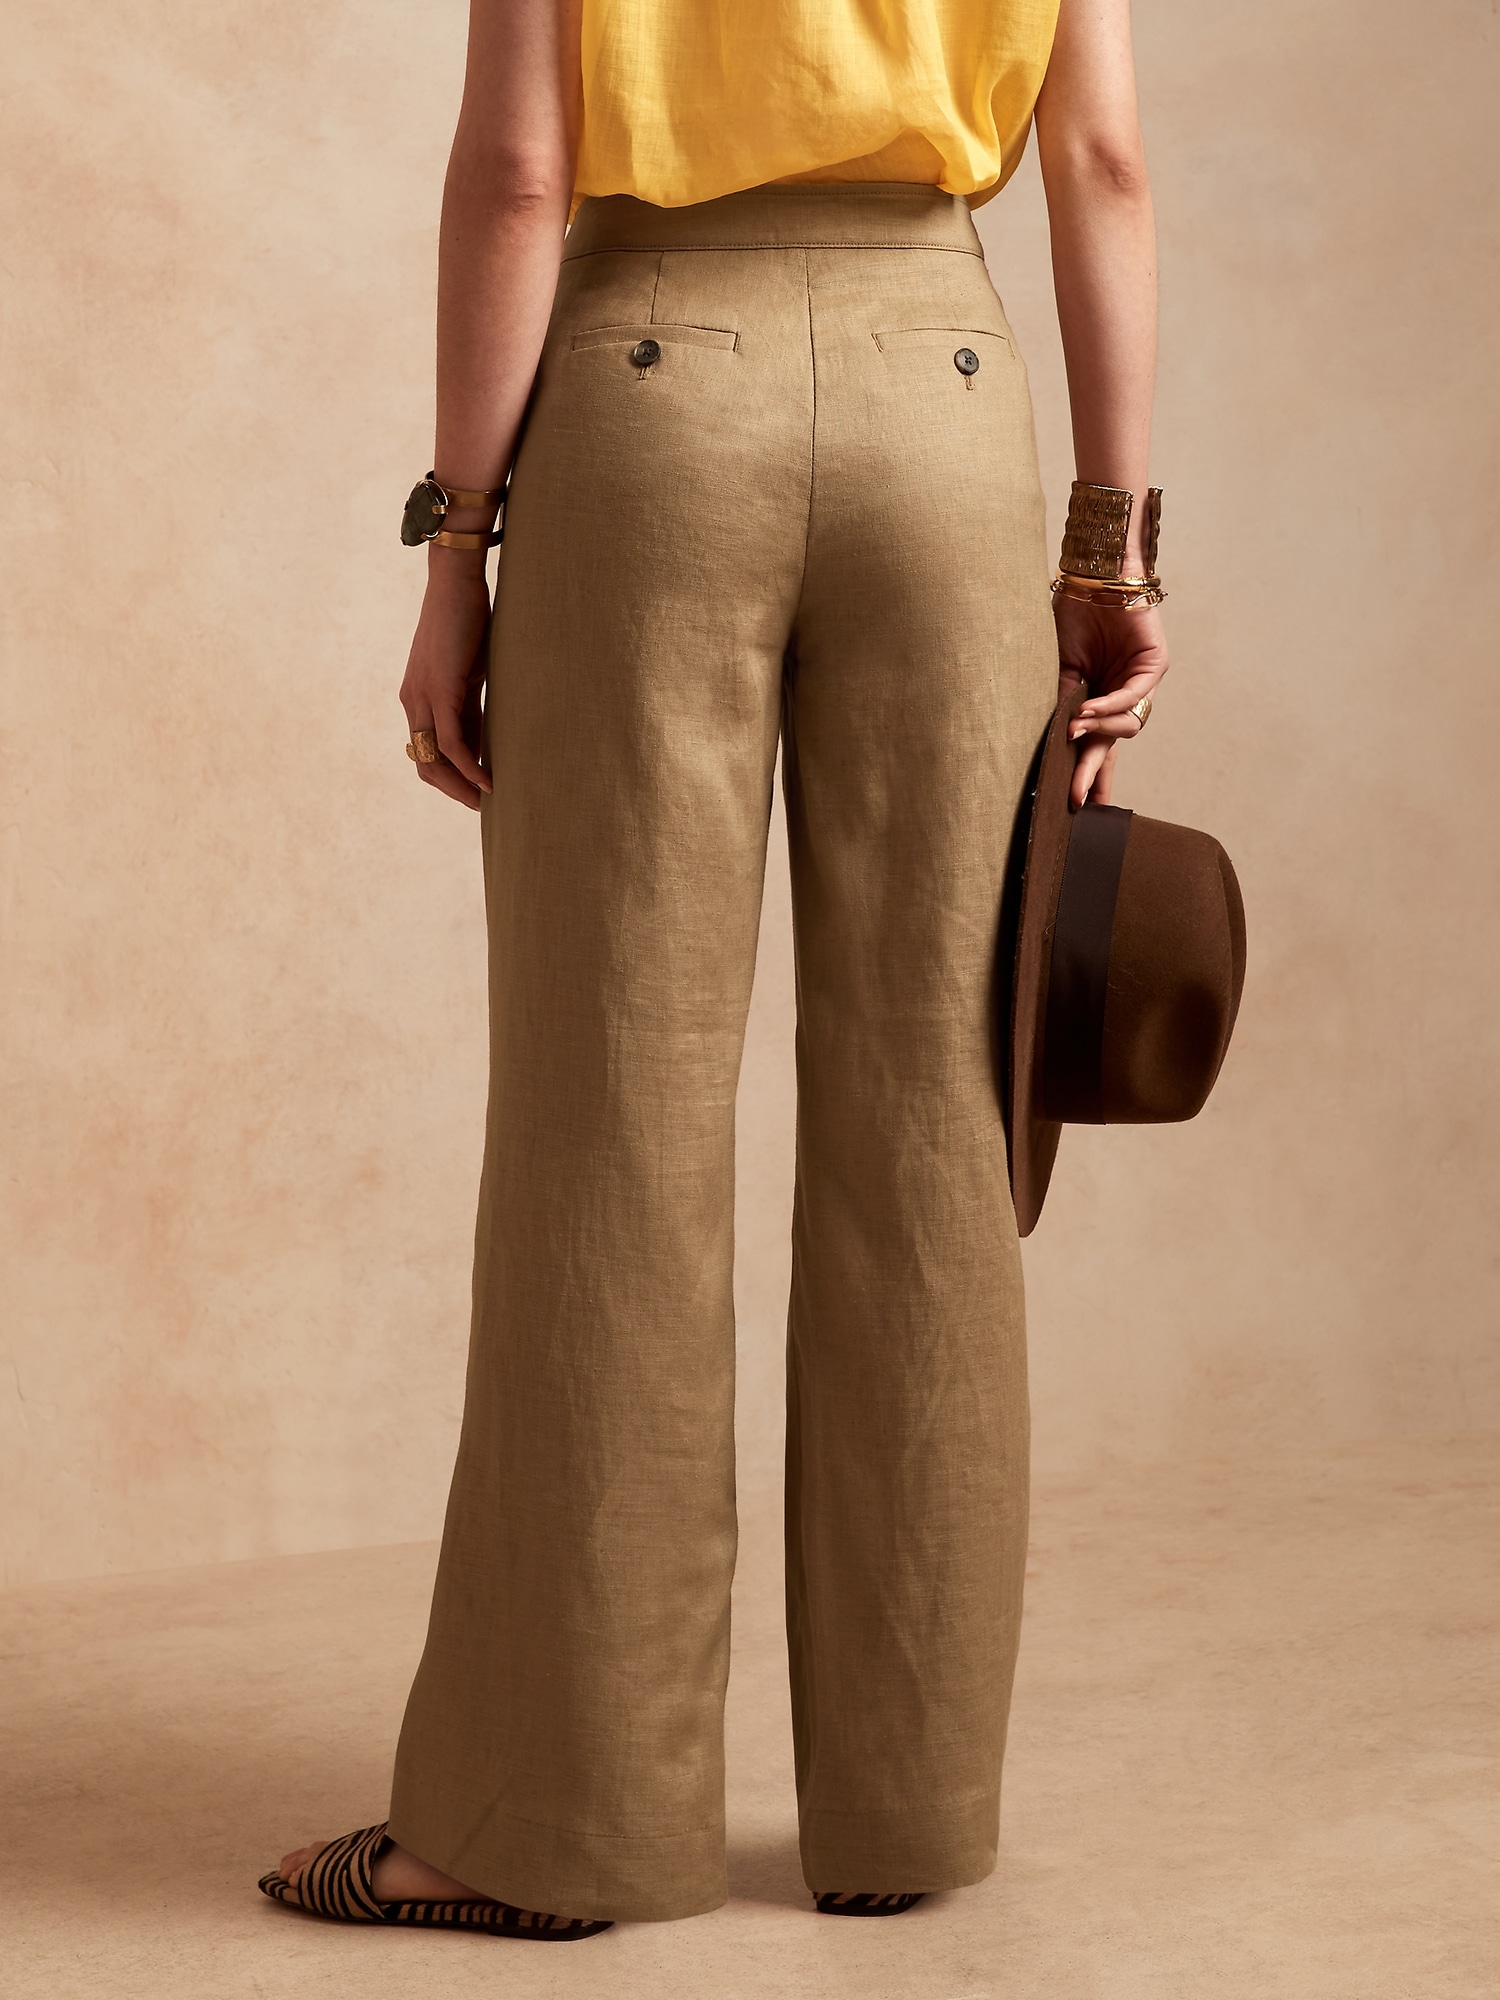 Pants - Brown Wide Leg Linen Pants